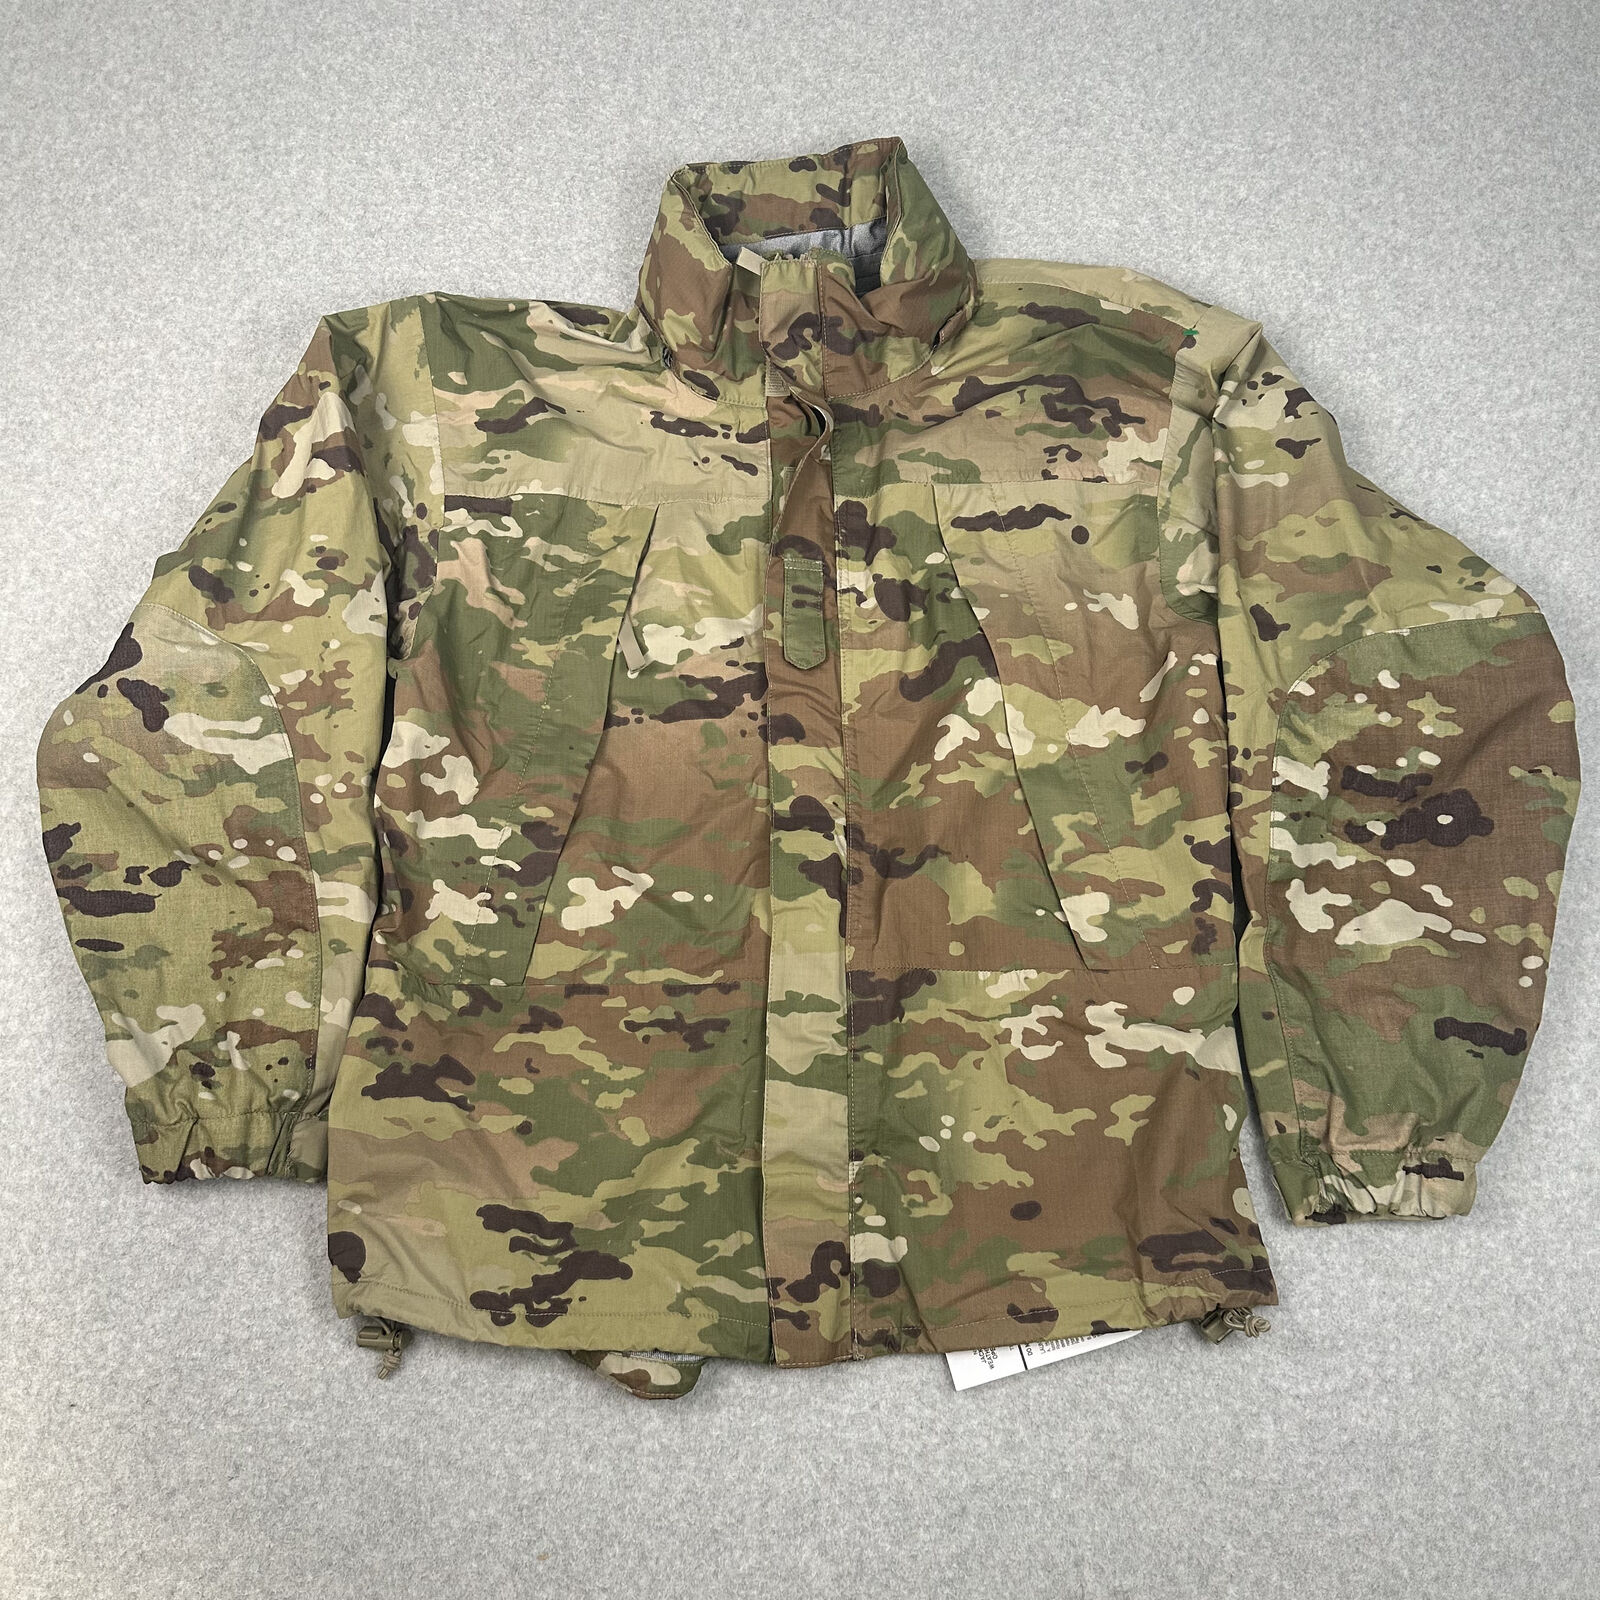 Army Extreme Cold Weather Wet Weather Jacket small Regular Gen III Multicam USGI